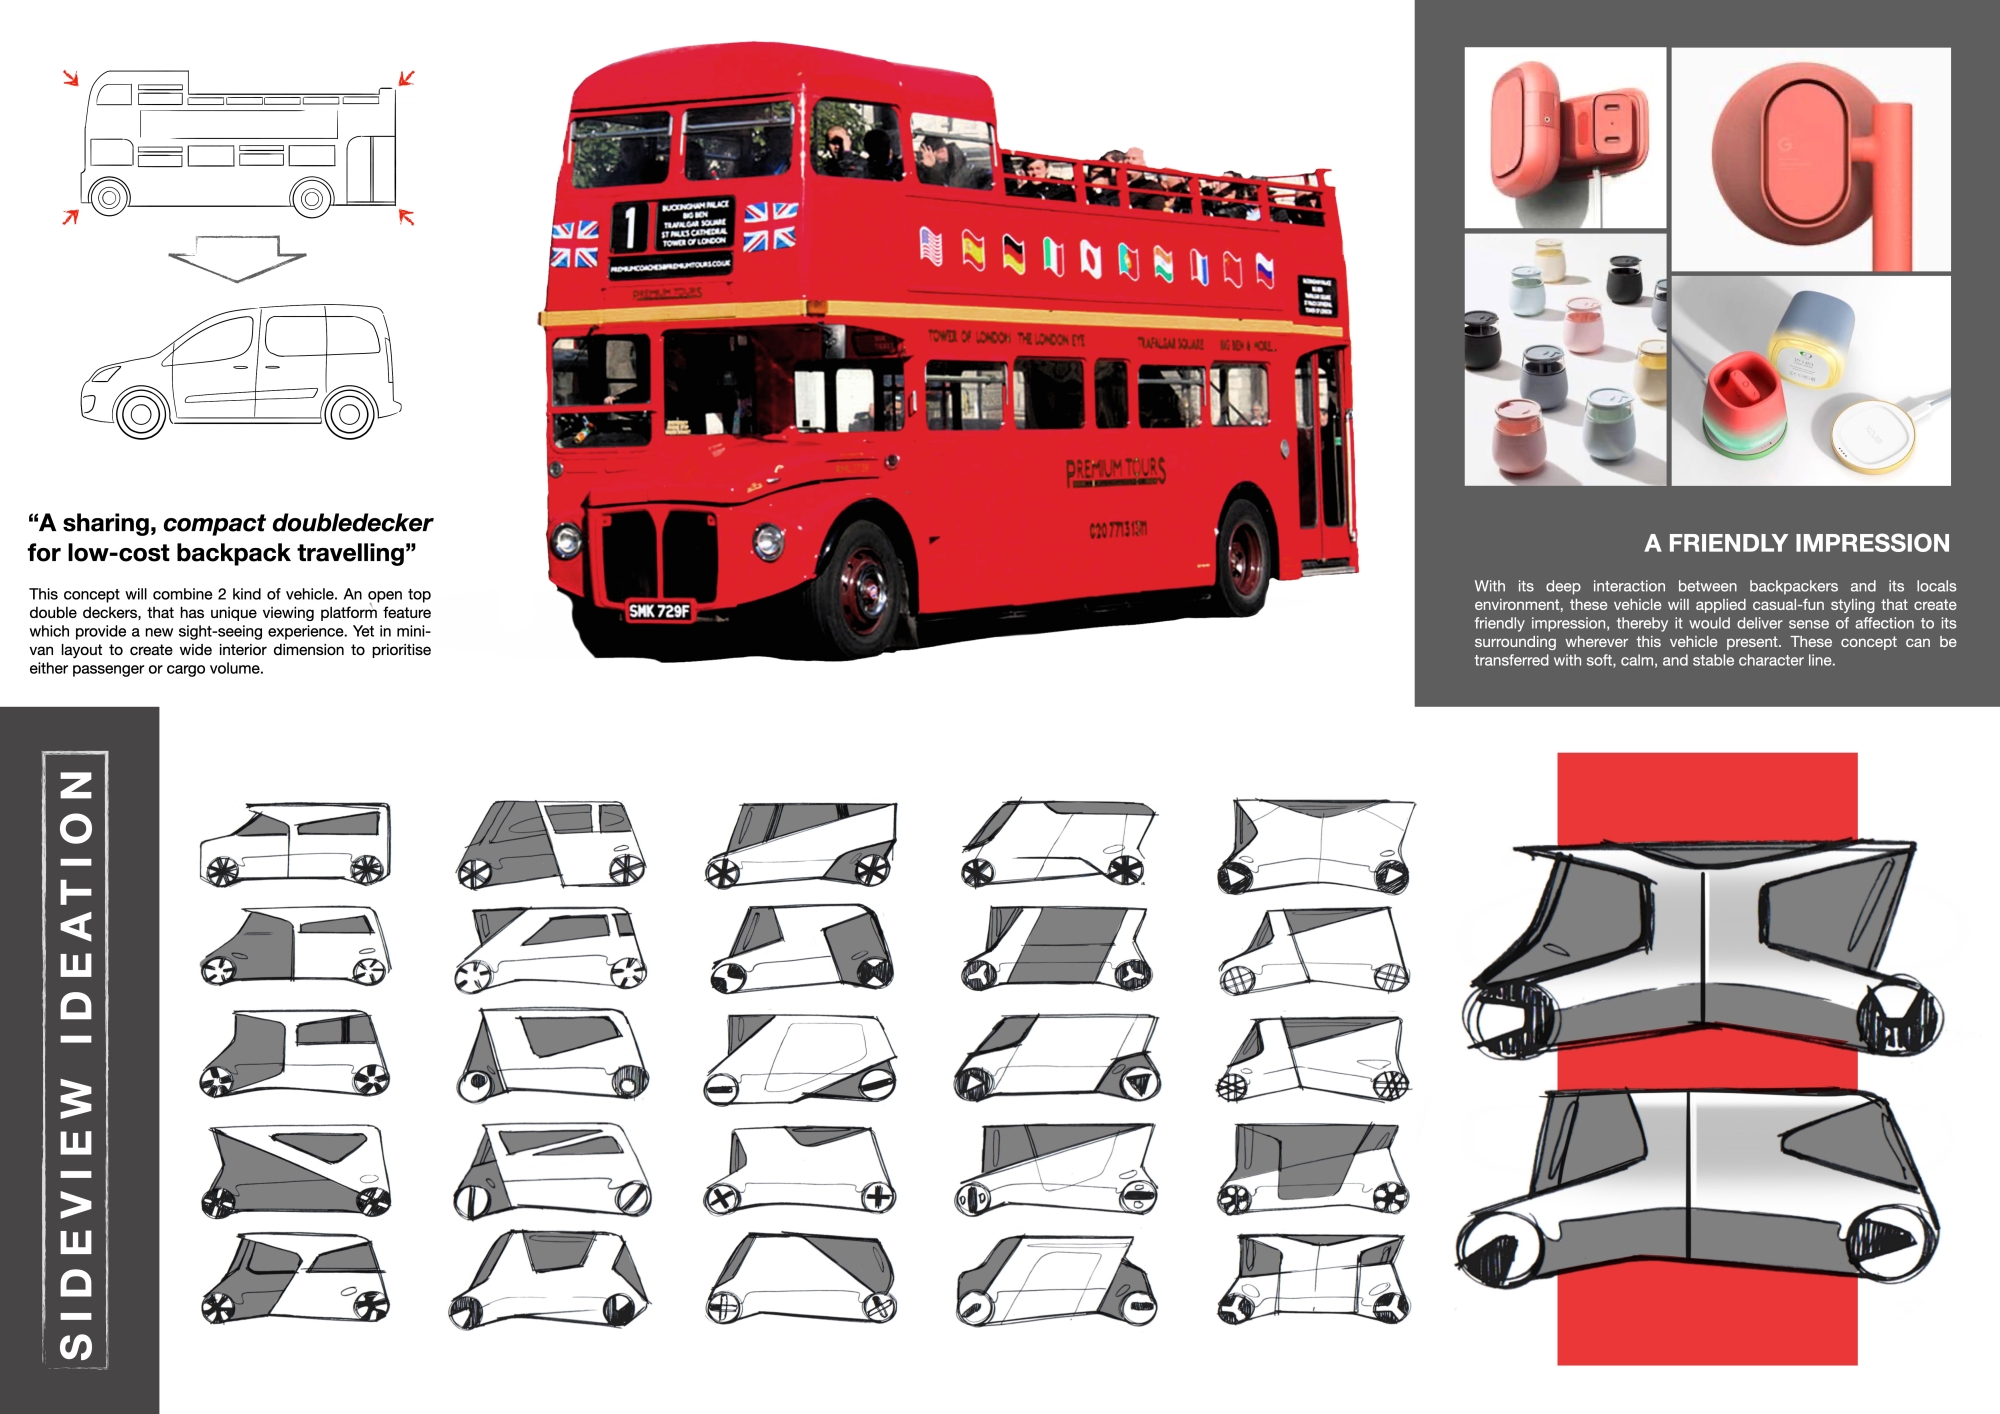 11 Cda Design Competition -collection Of Excellent Works- Car Design Academy Online Car Design School